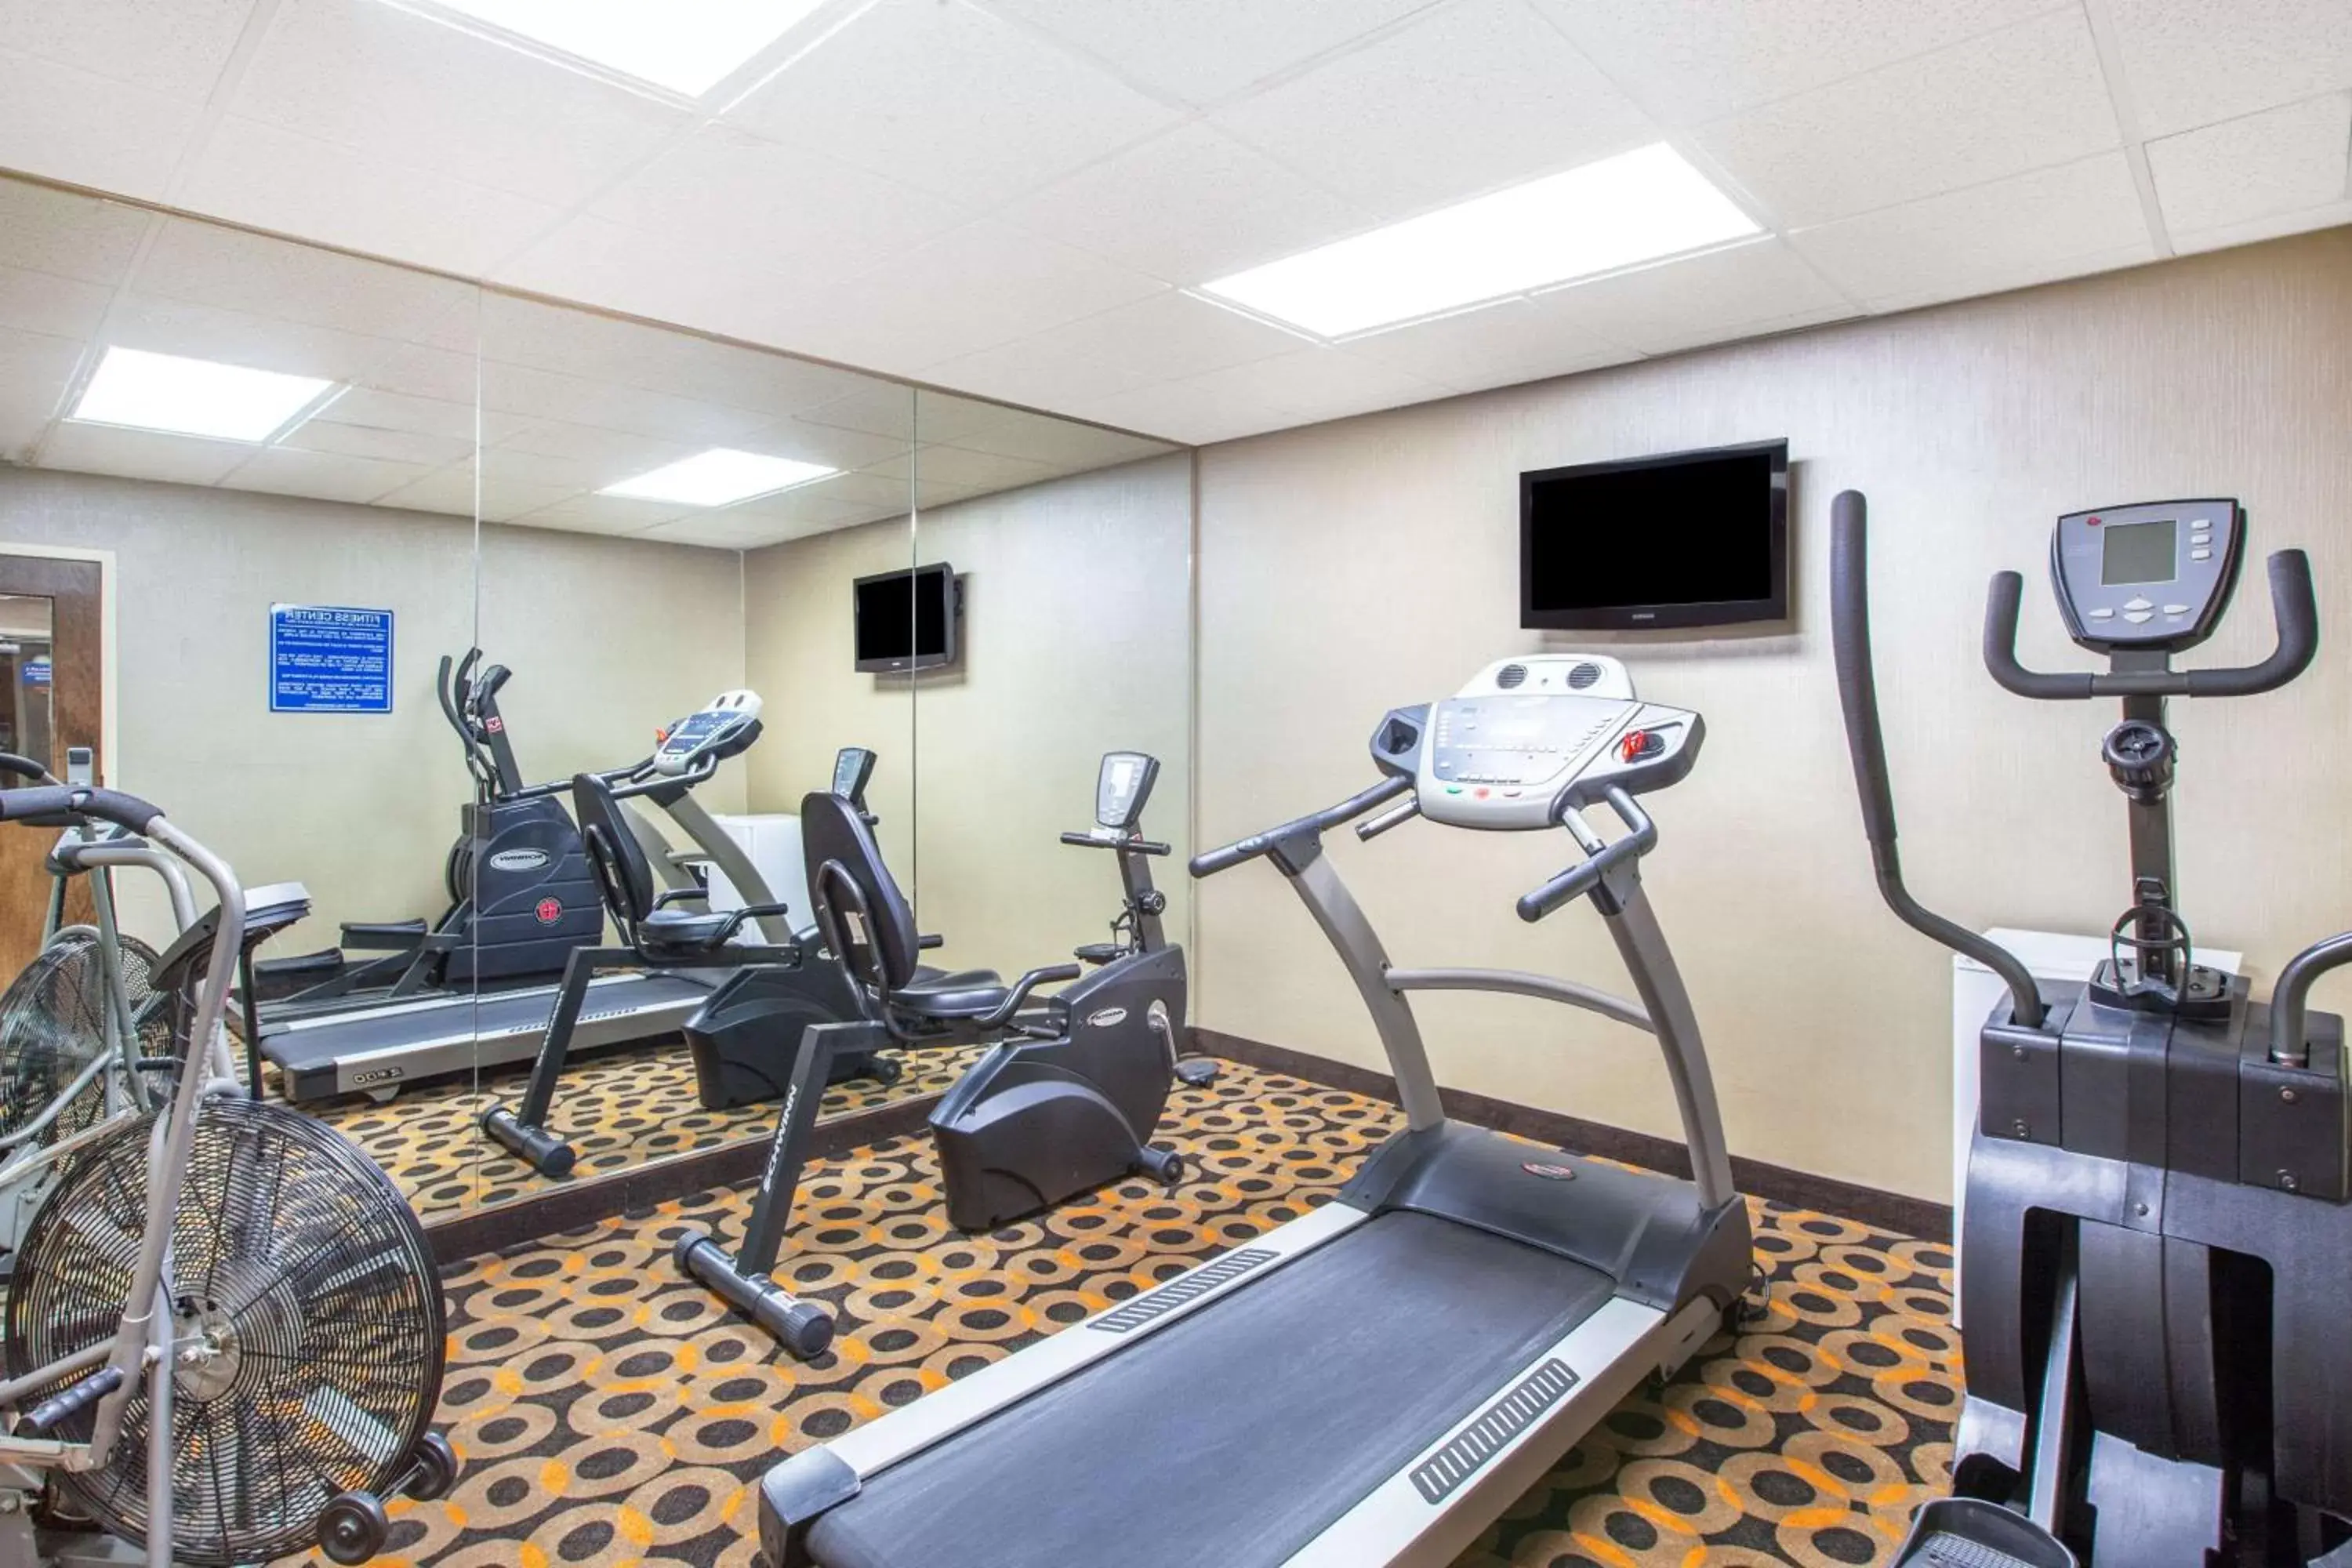 Fitness centre/facilities, Fitness Center/Facilities in Days Inn by Wyndham Brewerton/ Syracuse near Oneida Lake